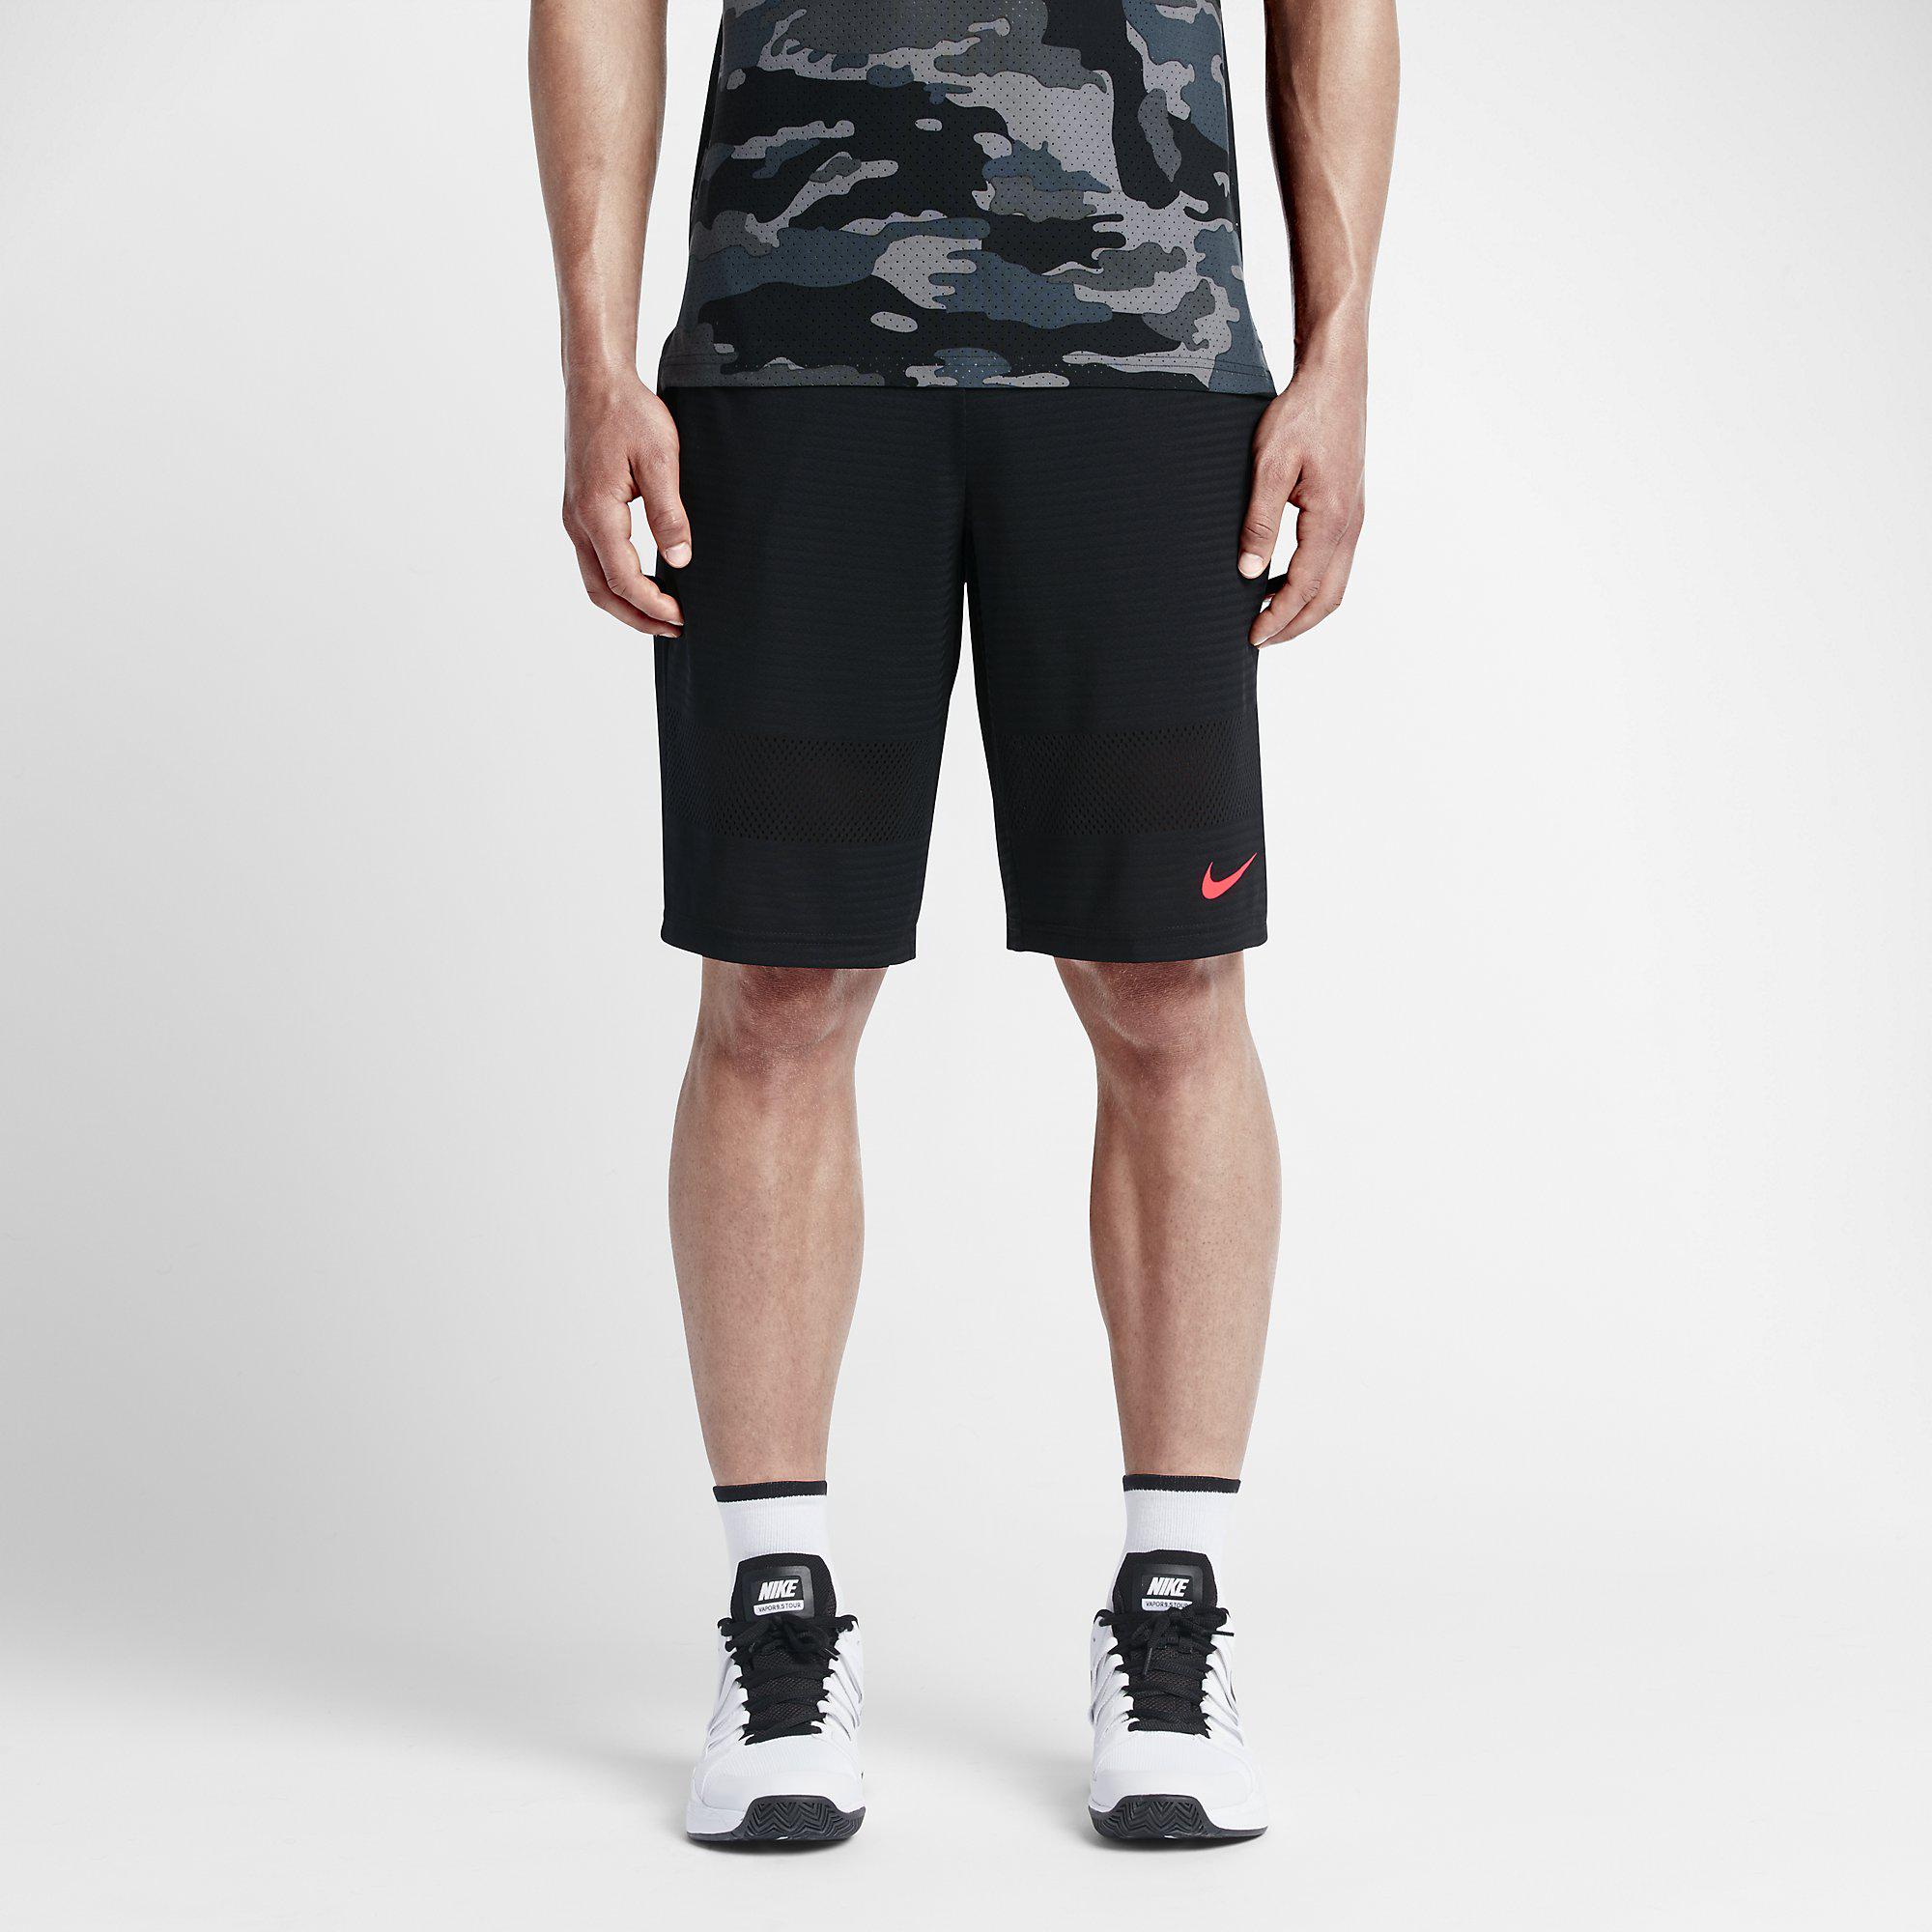 Nike Mens Gladiator Breathe 11 Inch Tennis Shorts - Black/Hot Lava ...